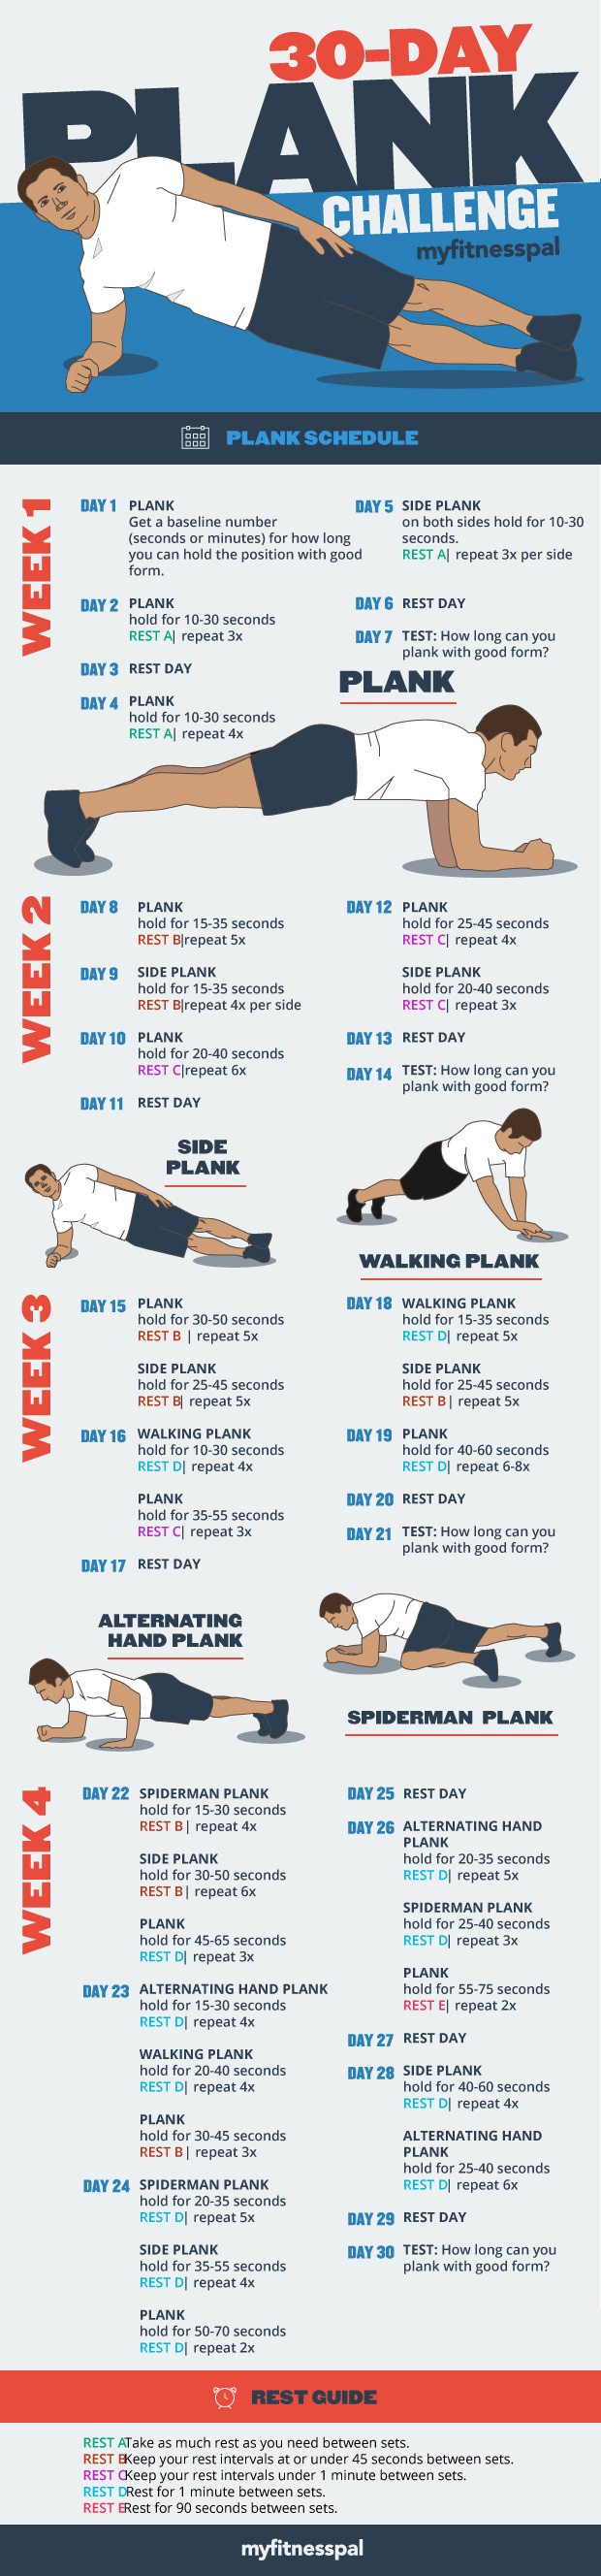 plank training plan rev